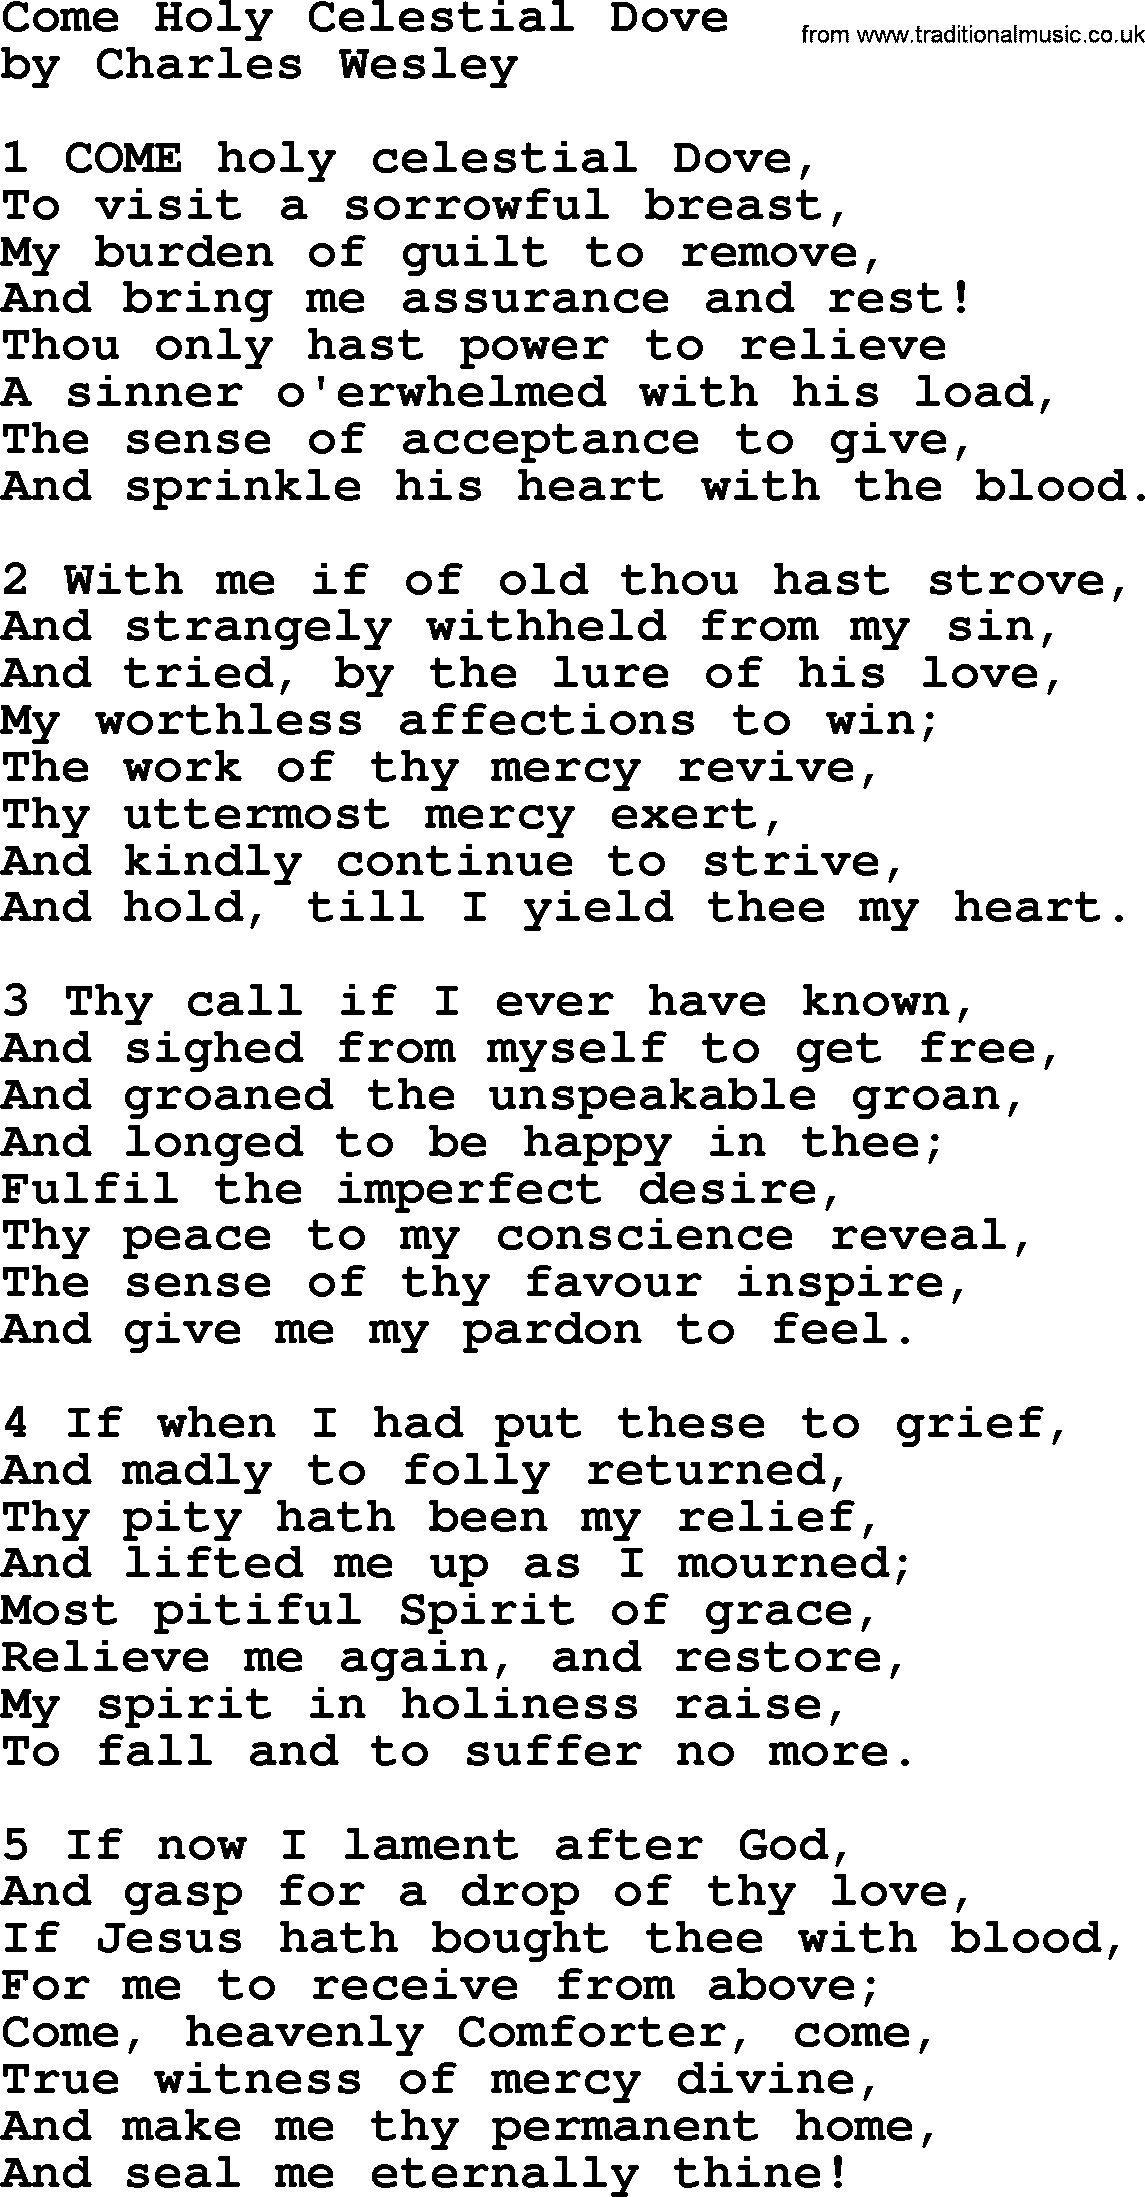 Charles Wesley hymn: Come Holy Celestial Dove, lyrics